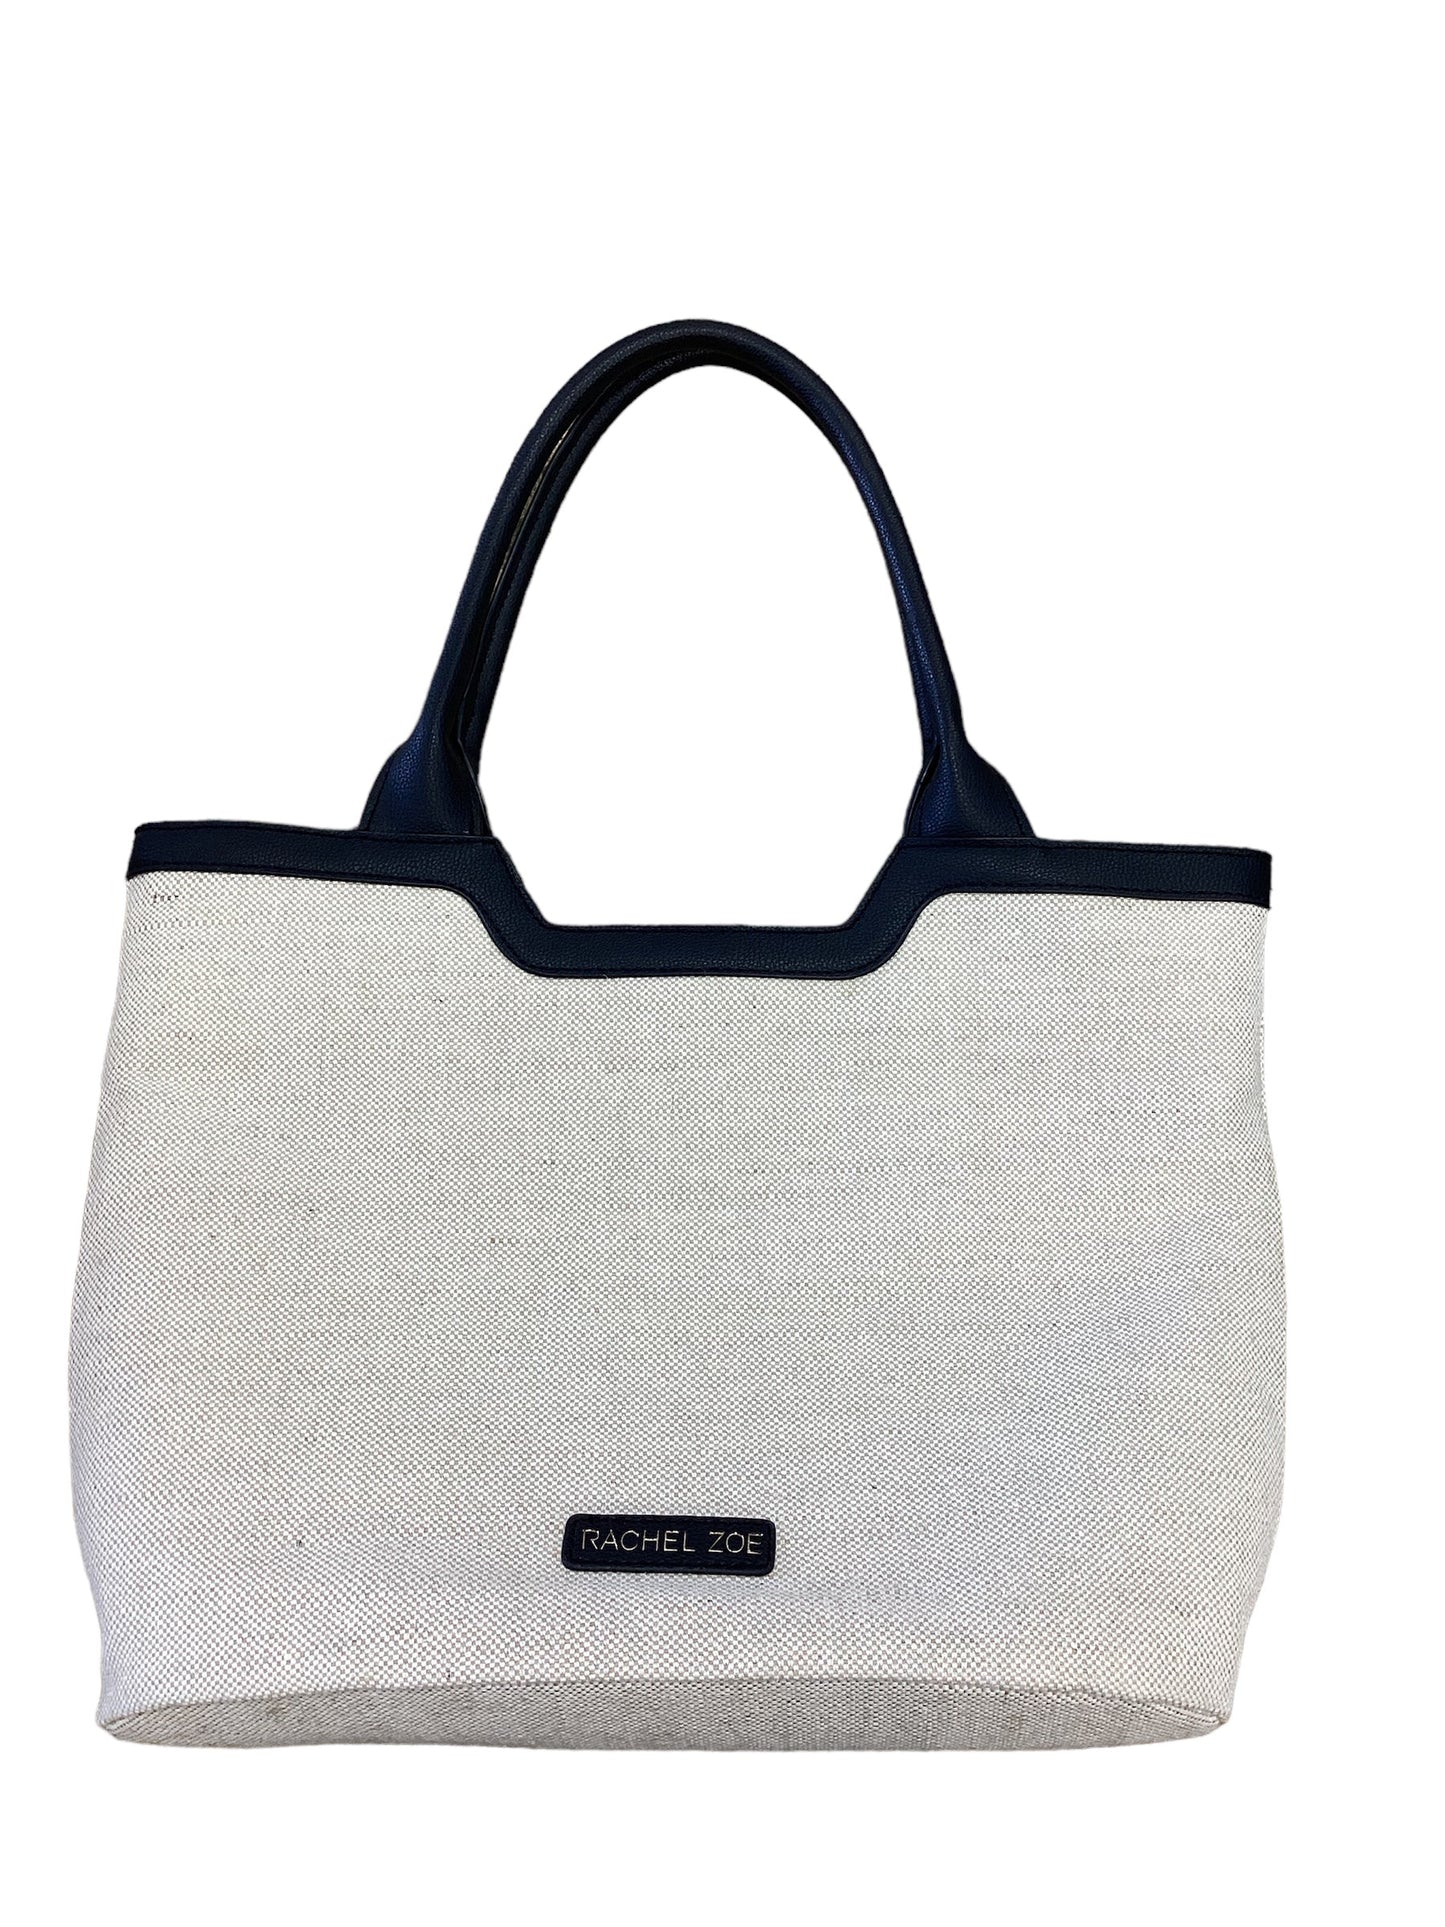 Handbag By Rachel Roy  Size: Medium